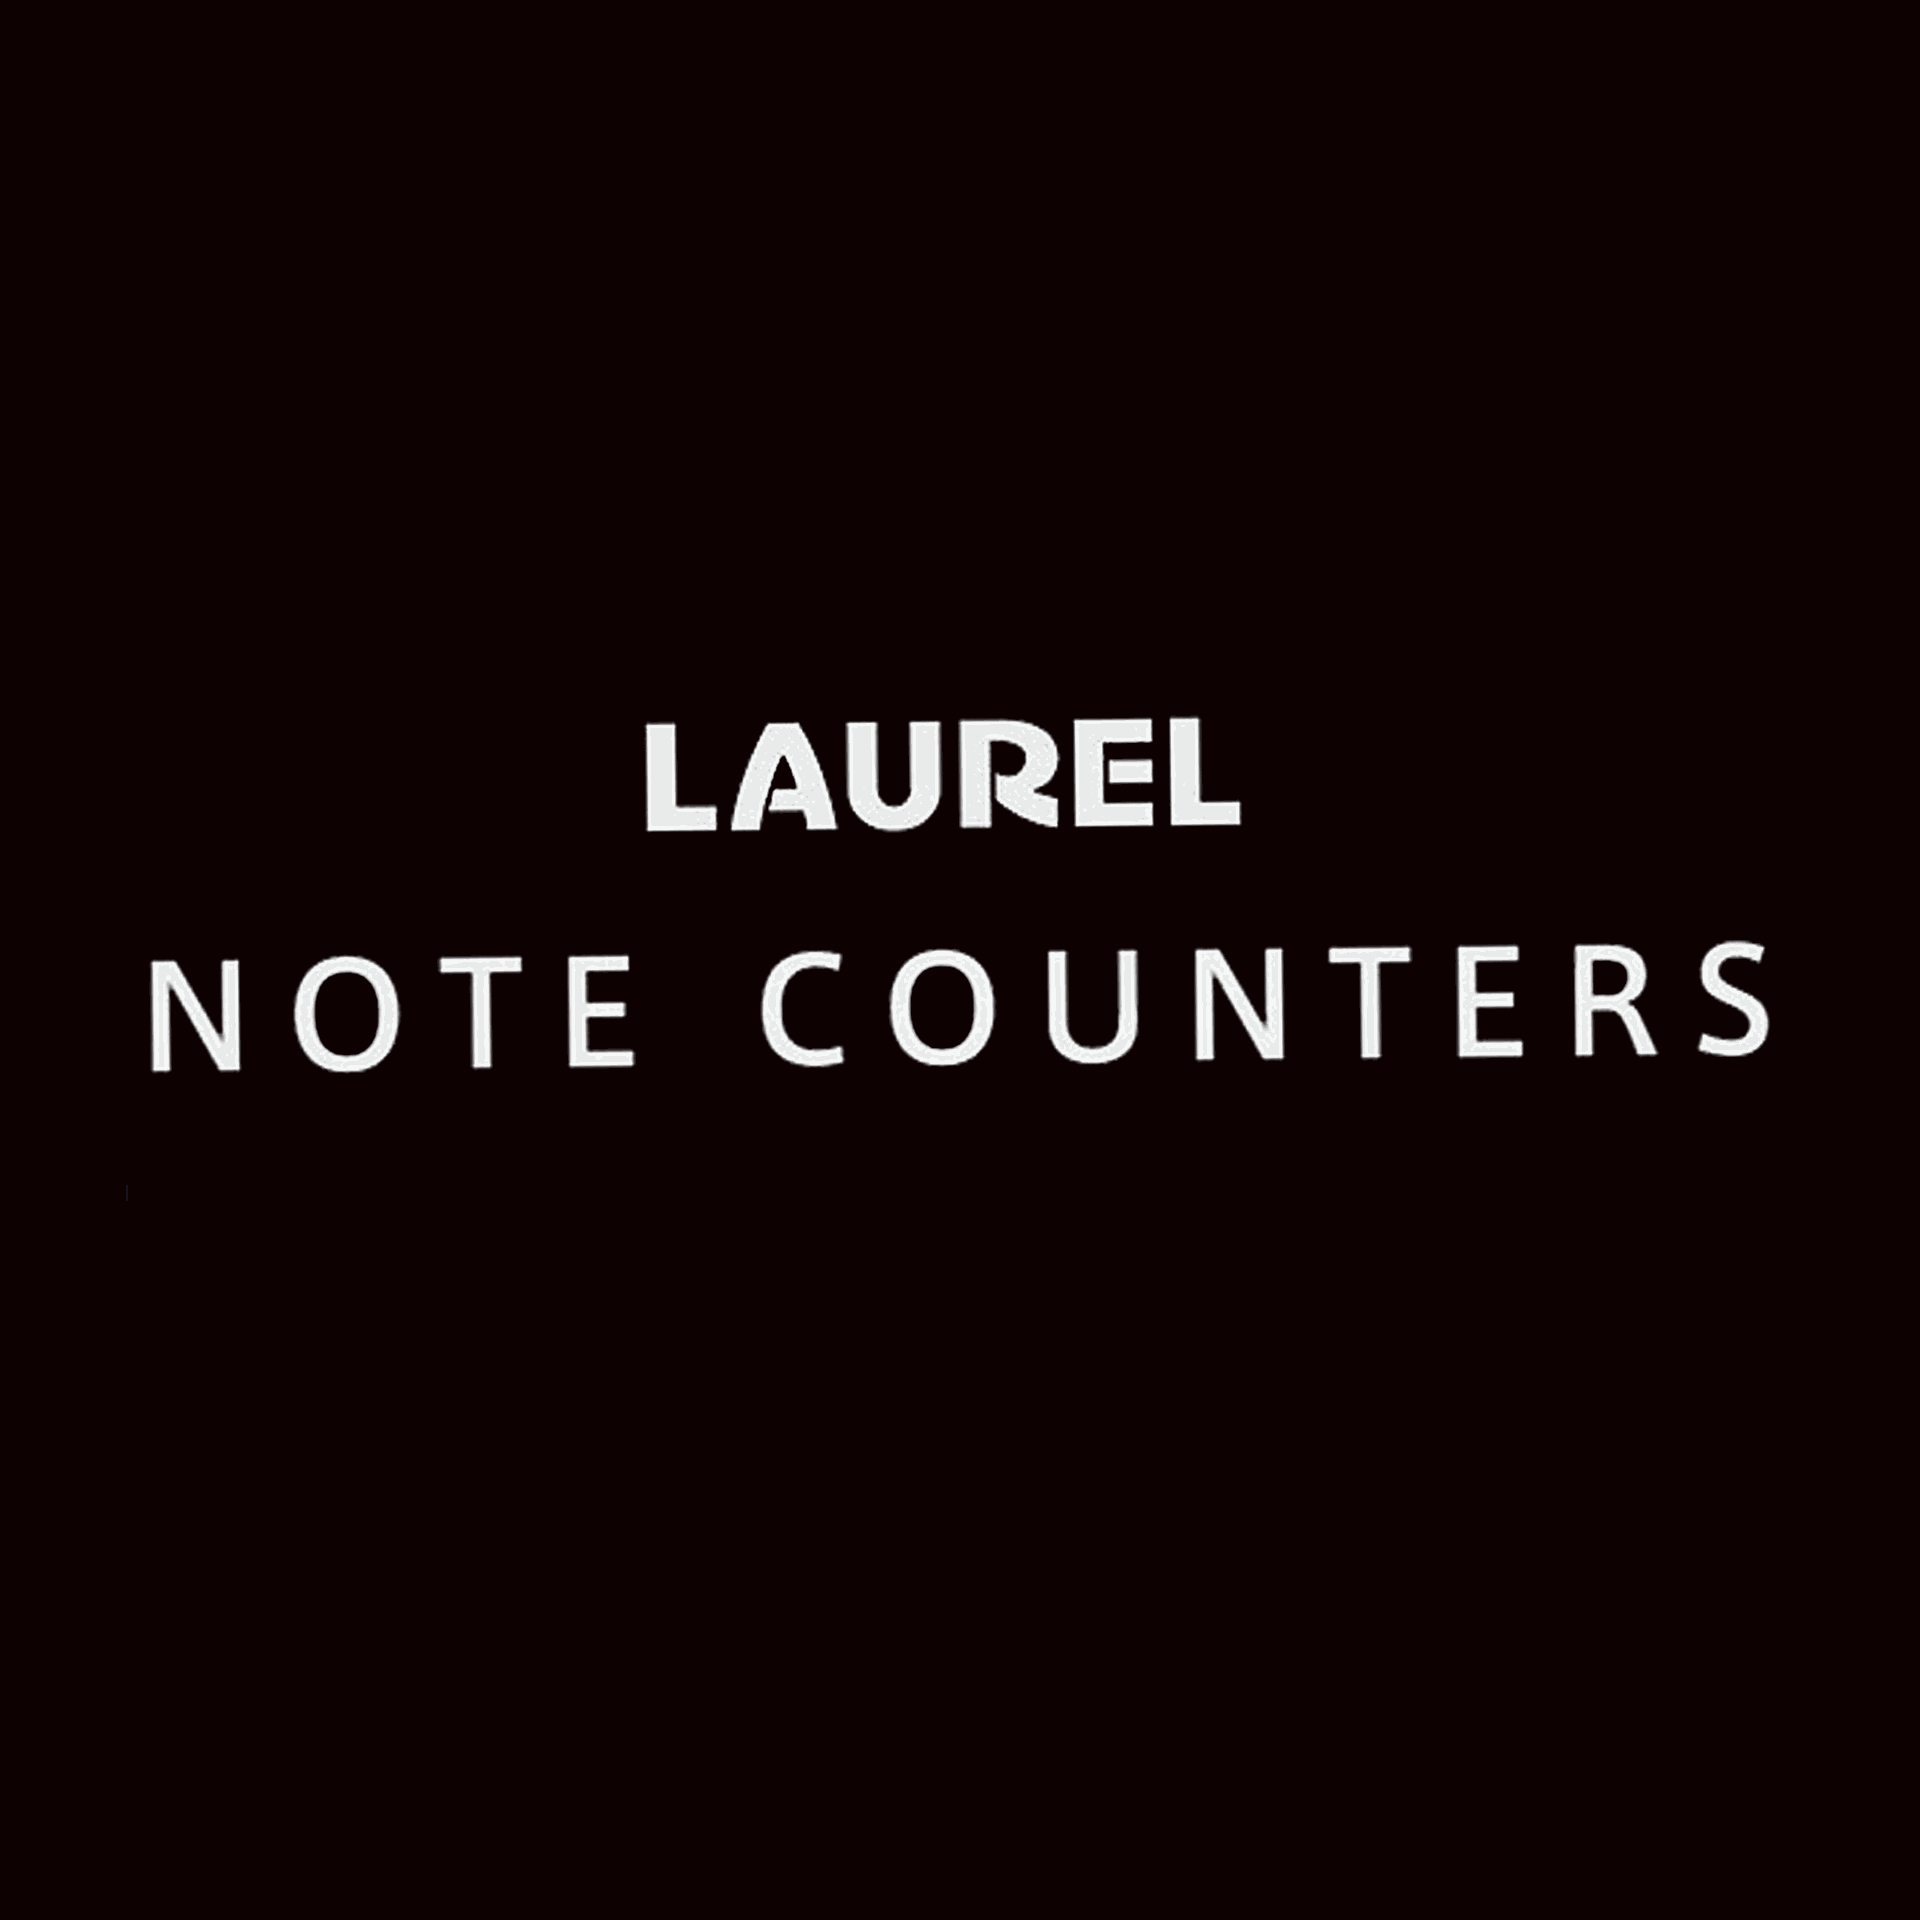 Brand: Laurel